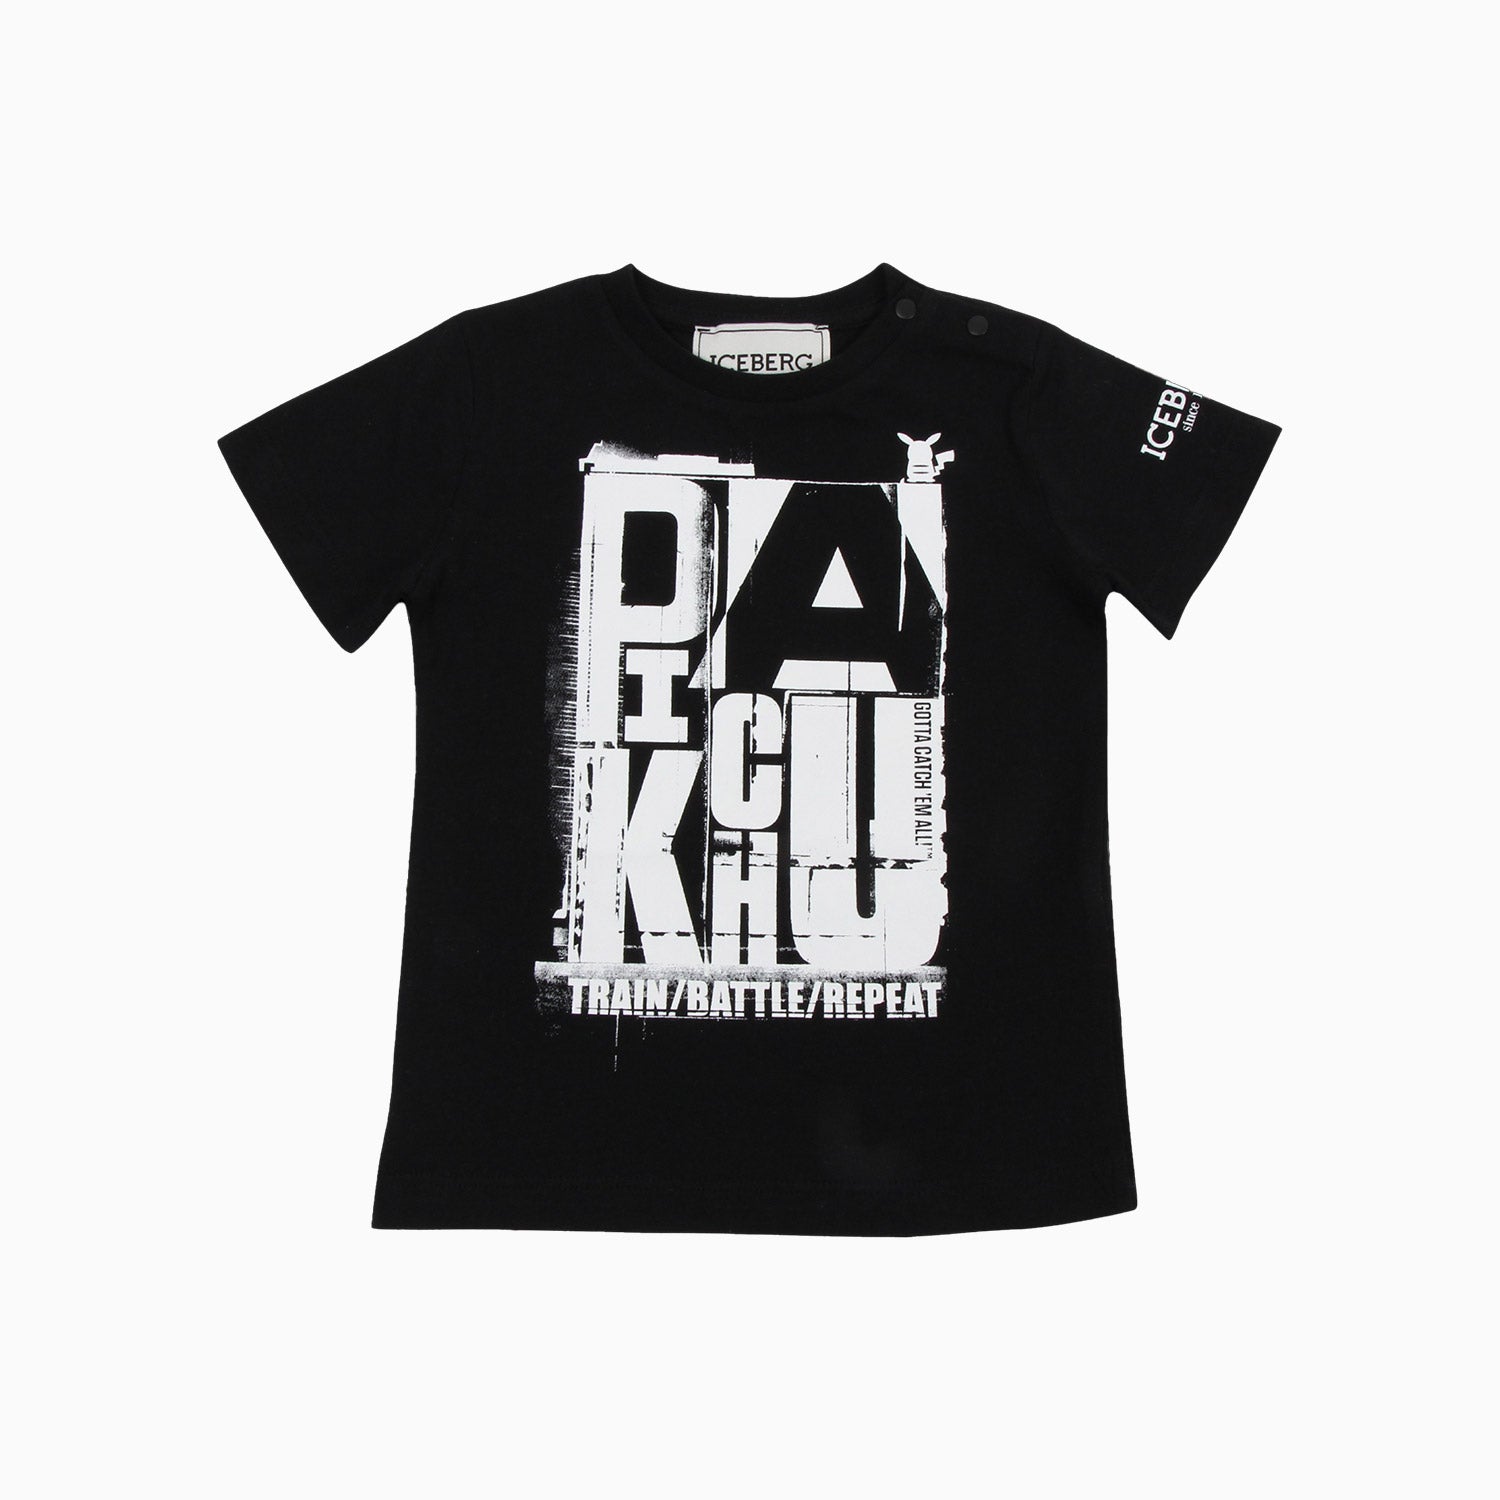 Iceberg Kid's T Shirt Toddlers - Color: Nero - Kids Premium Clothing -